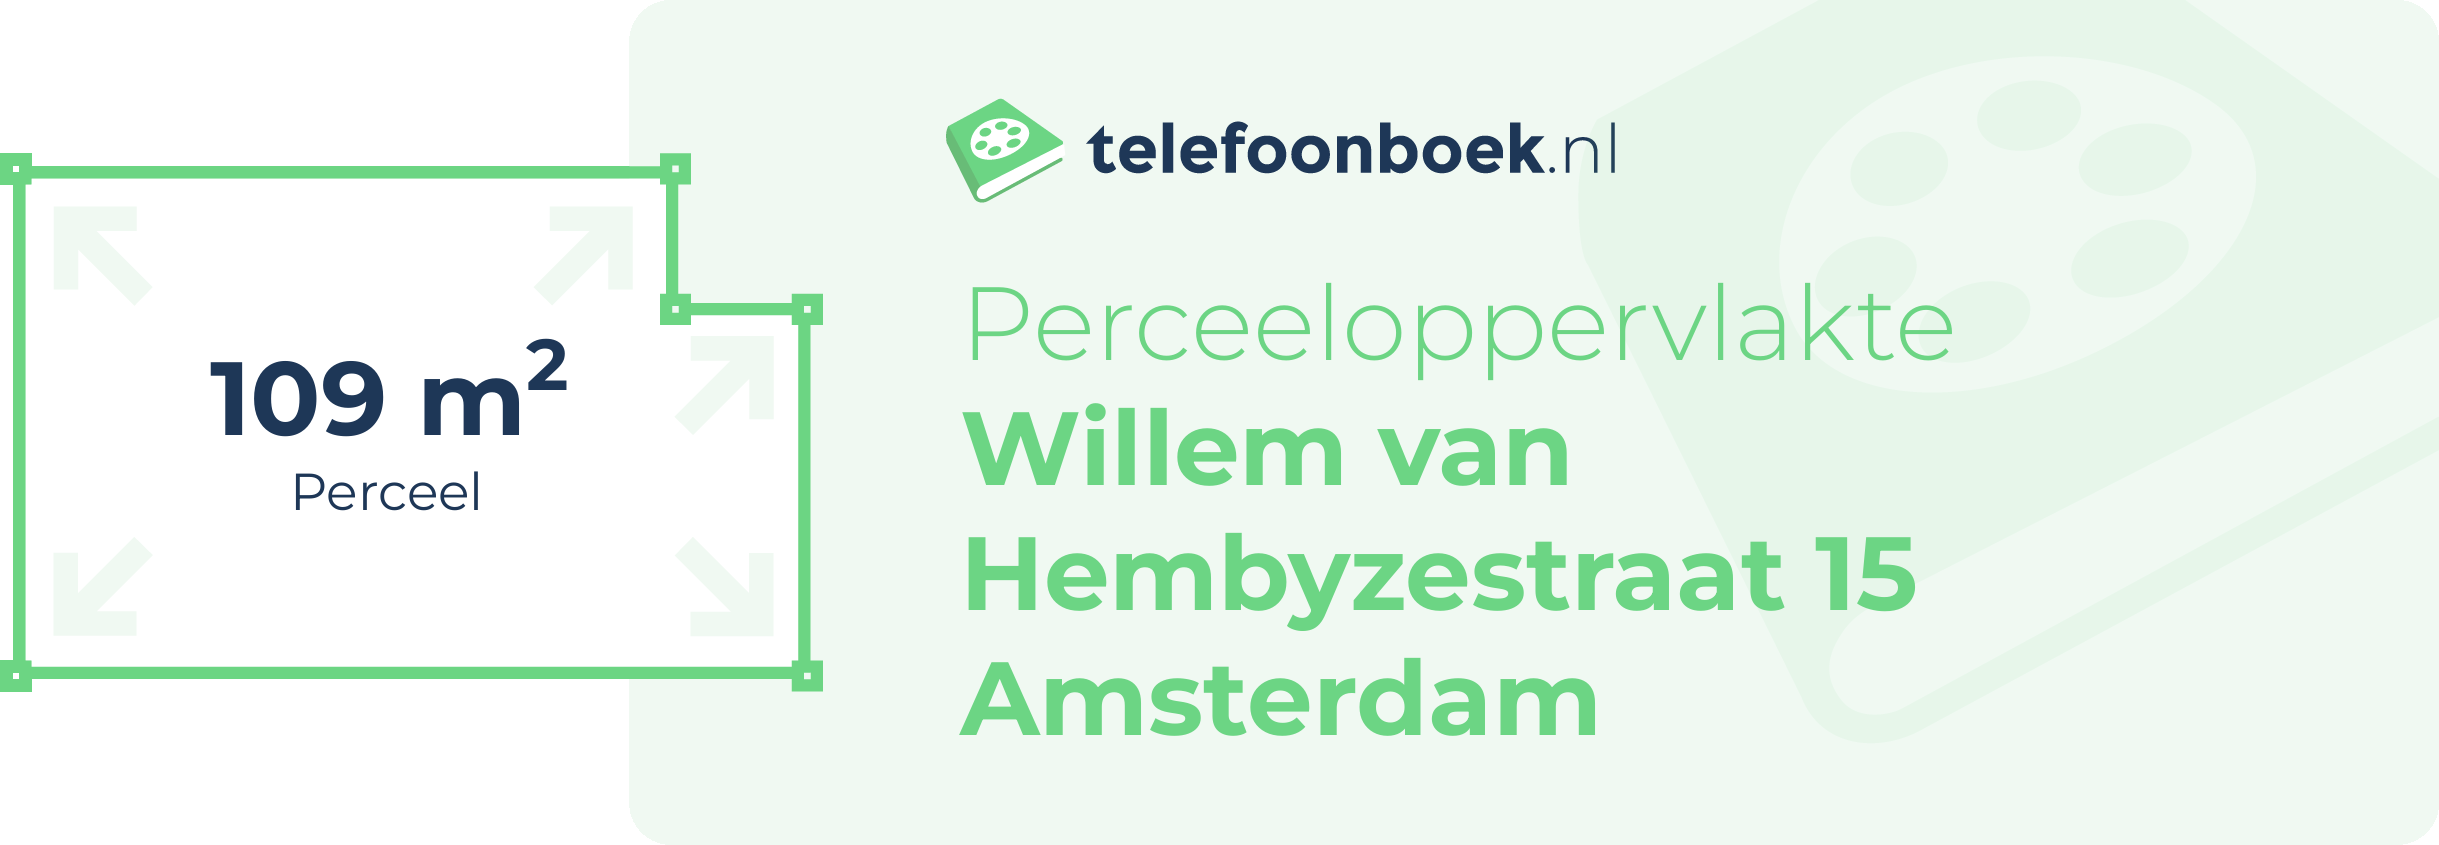 Perceeloppervlakte Willem Van Hembyzestraat 15 Amsterdam